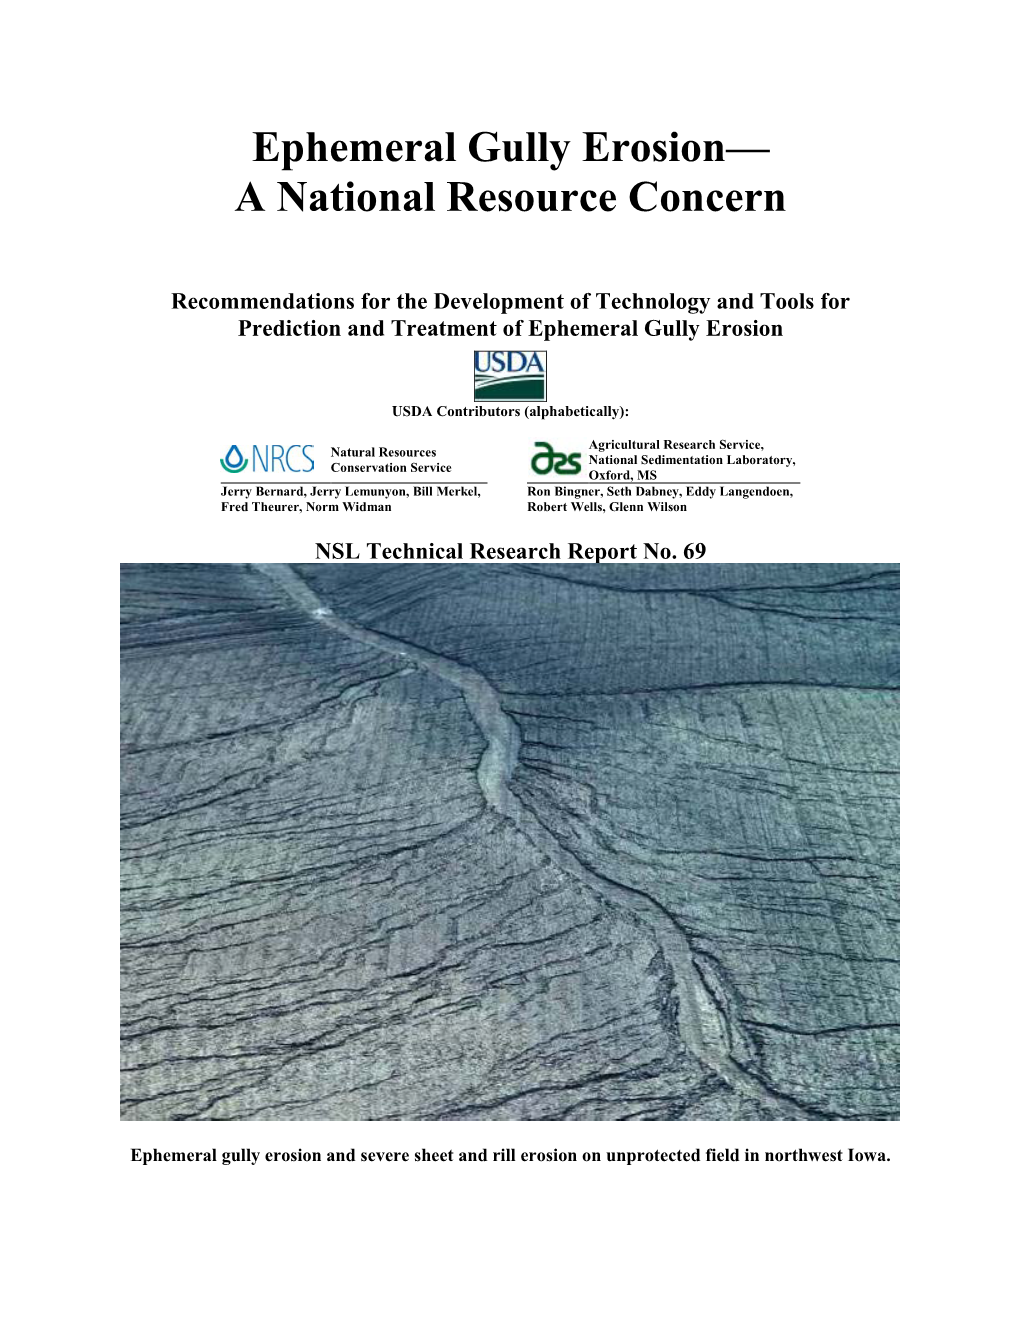 Ephemeral Gully Erosion--A National Resource Concern